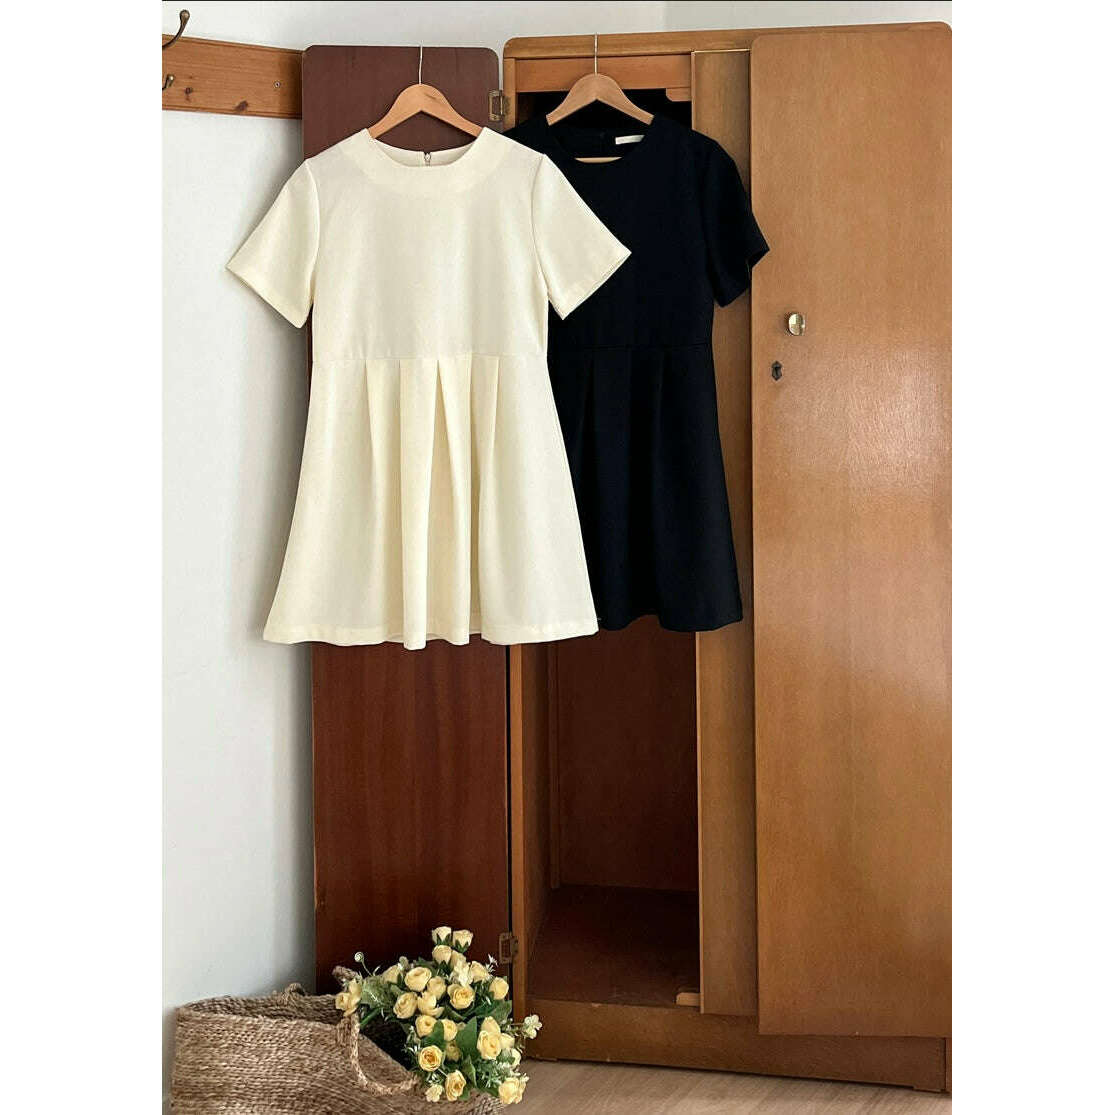 MUMMY.cc:短袖圓領簡潔百褶短裙